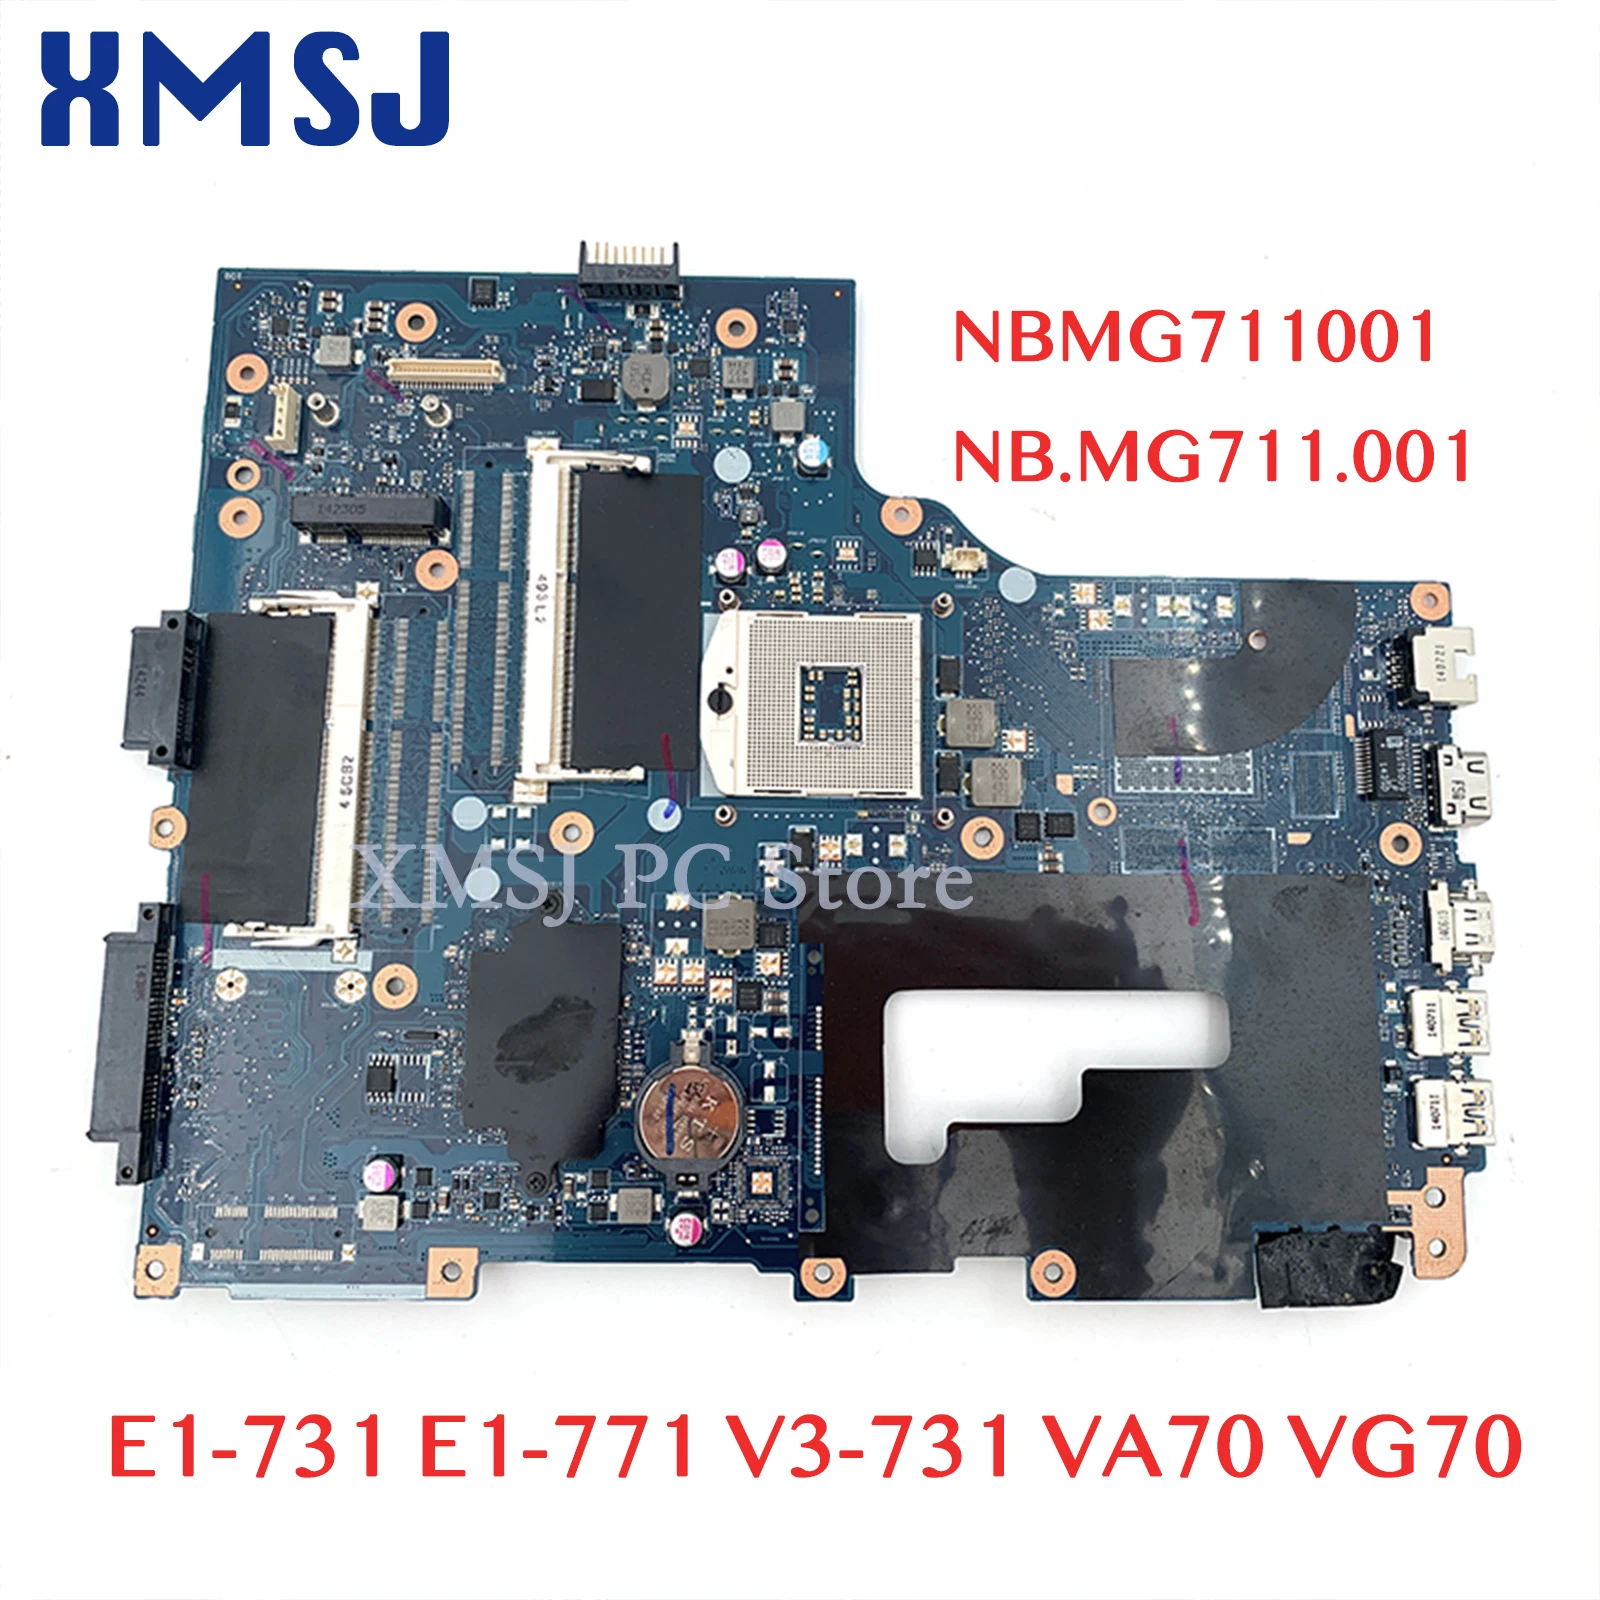 XMSJ Laptop Motherboard For Acer aspire E1-731 E1-771 V3-731 VA70 VG70 NBMG711001 NB.MG711.001 DDR3 main board full test